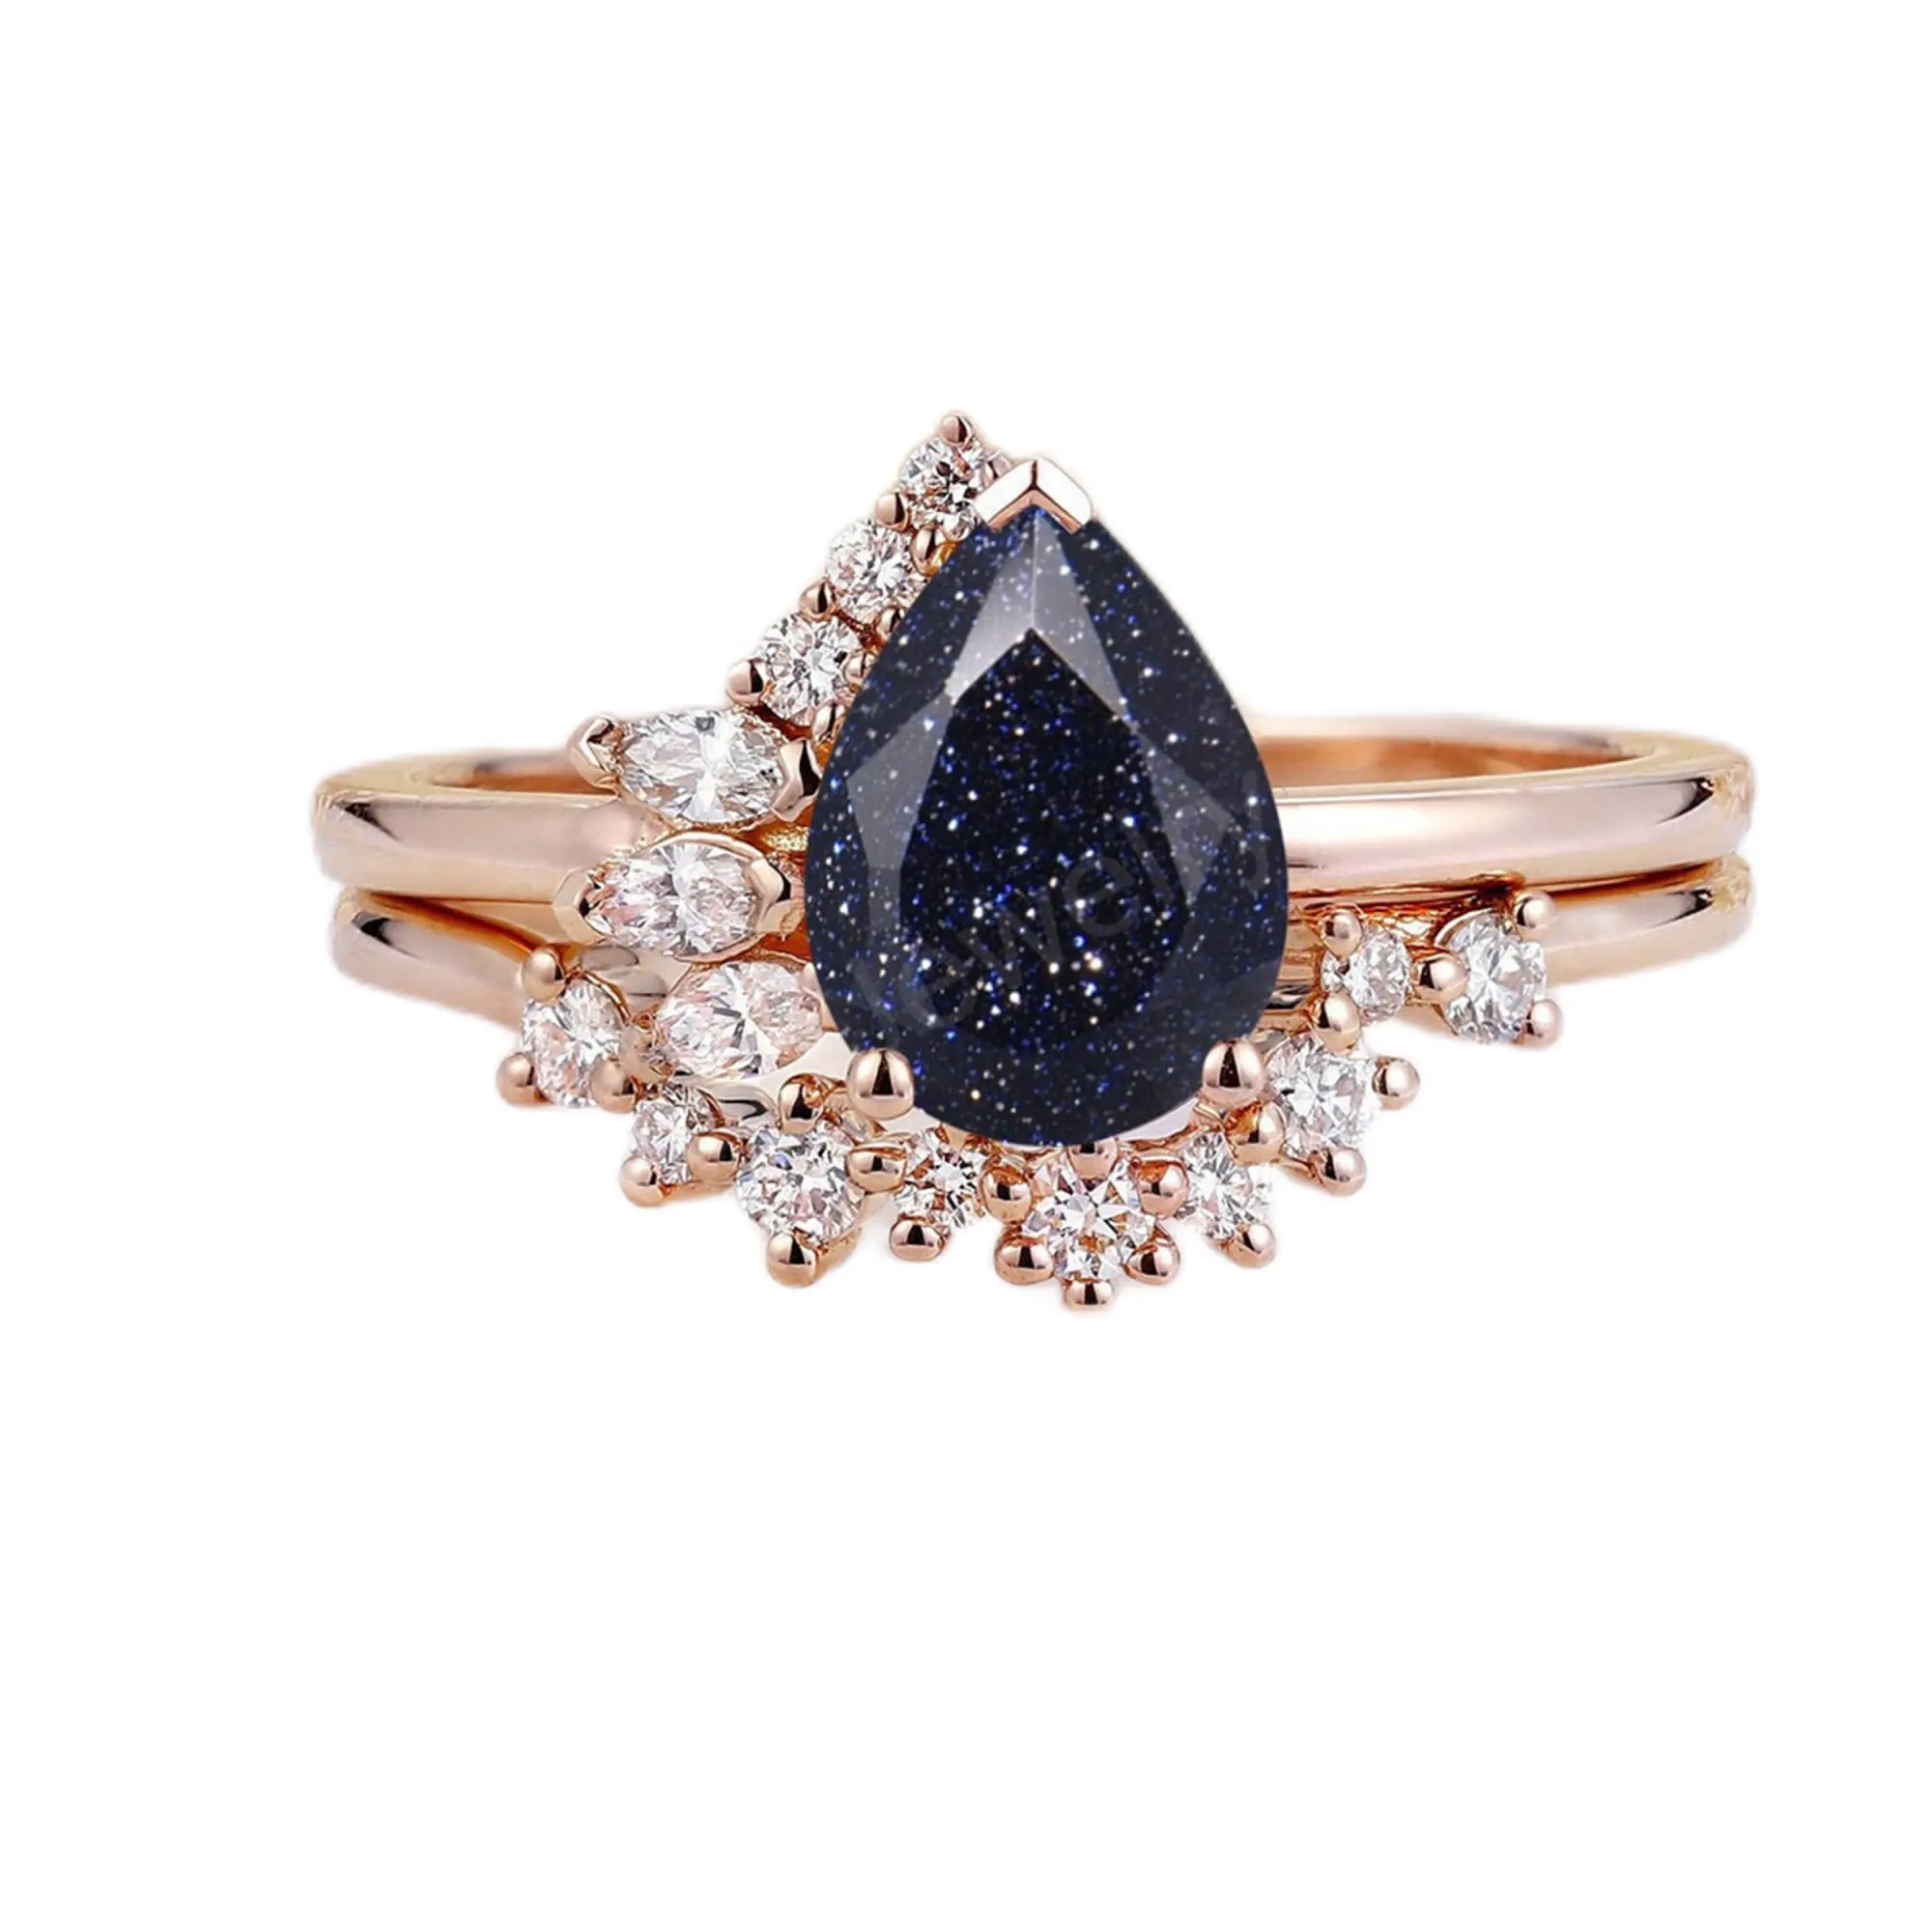 Conjunto de anillo de Plata de Ley 925 con piedra arenisca azul, anillo de boda con corte de pera y circón medio Halo